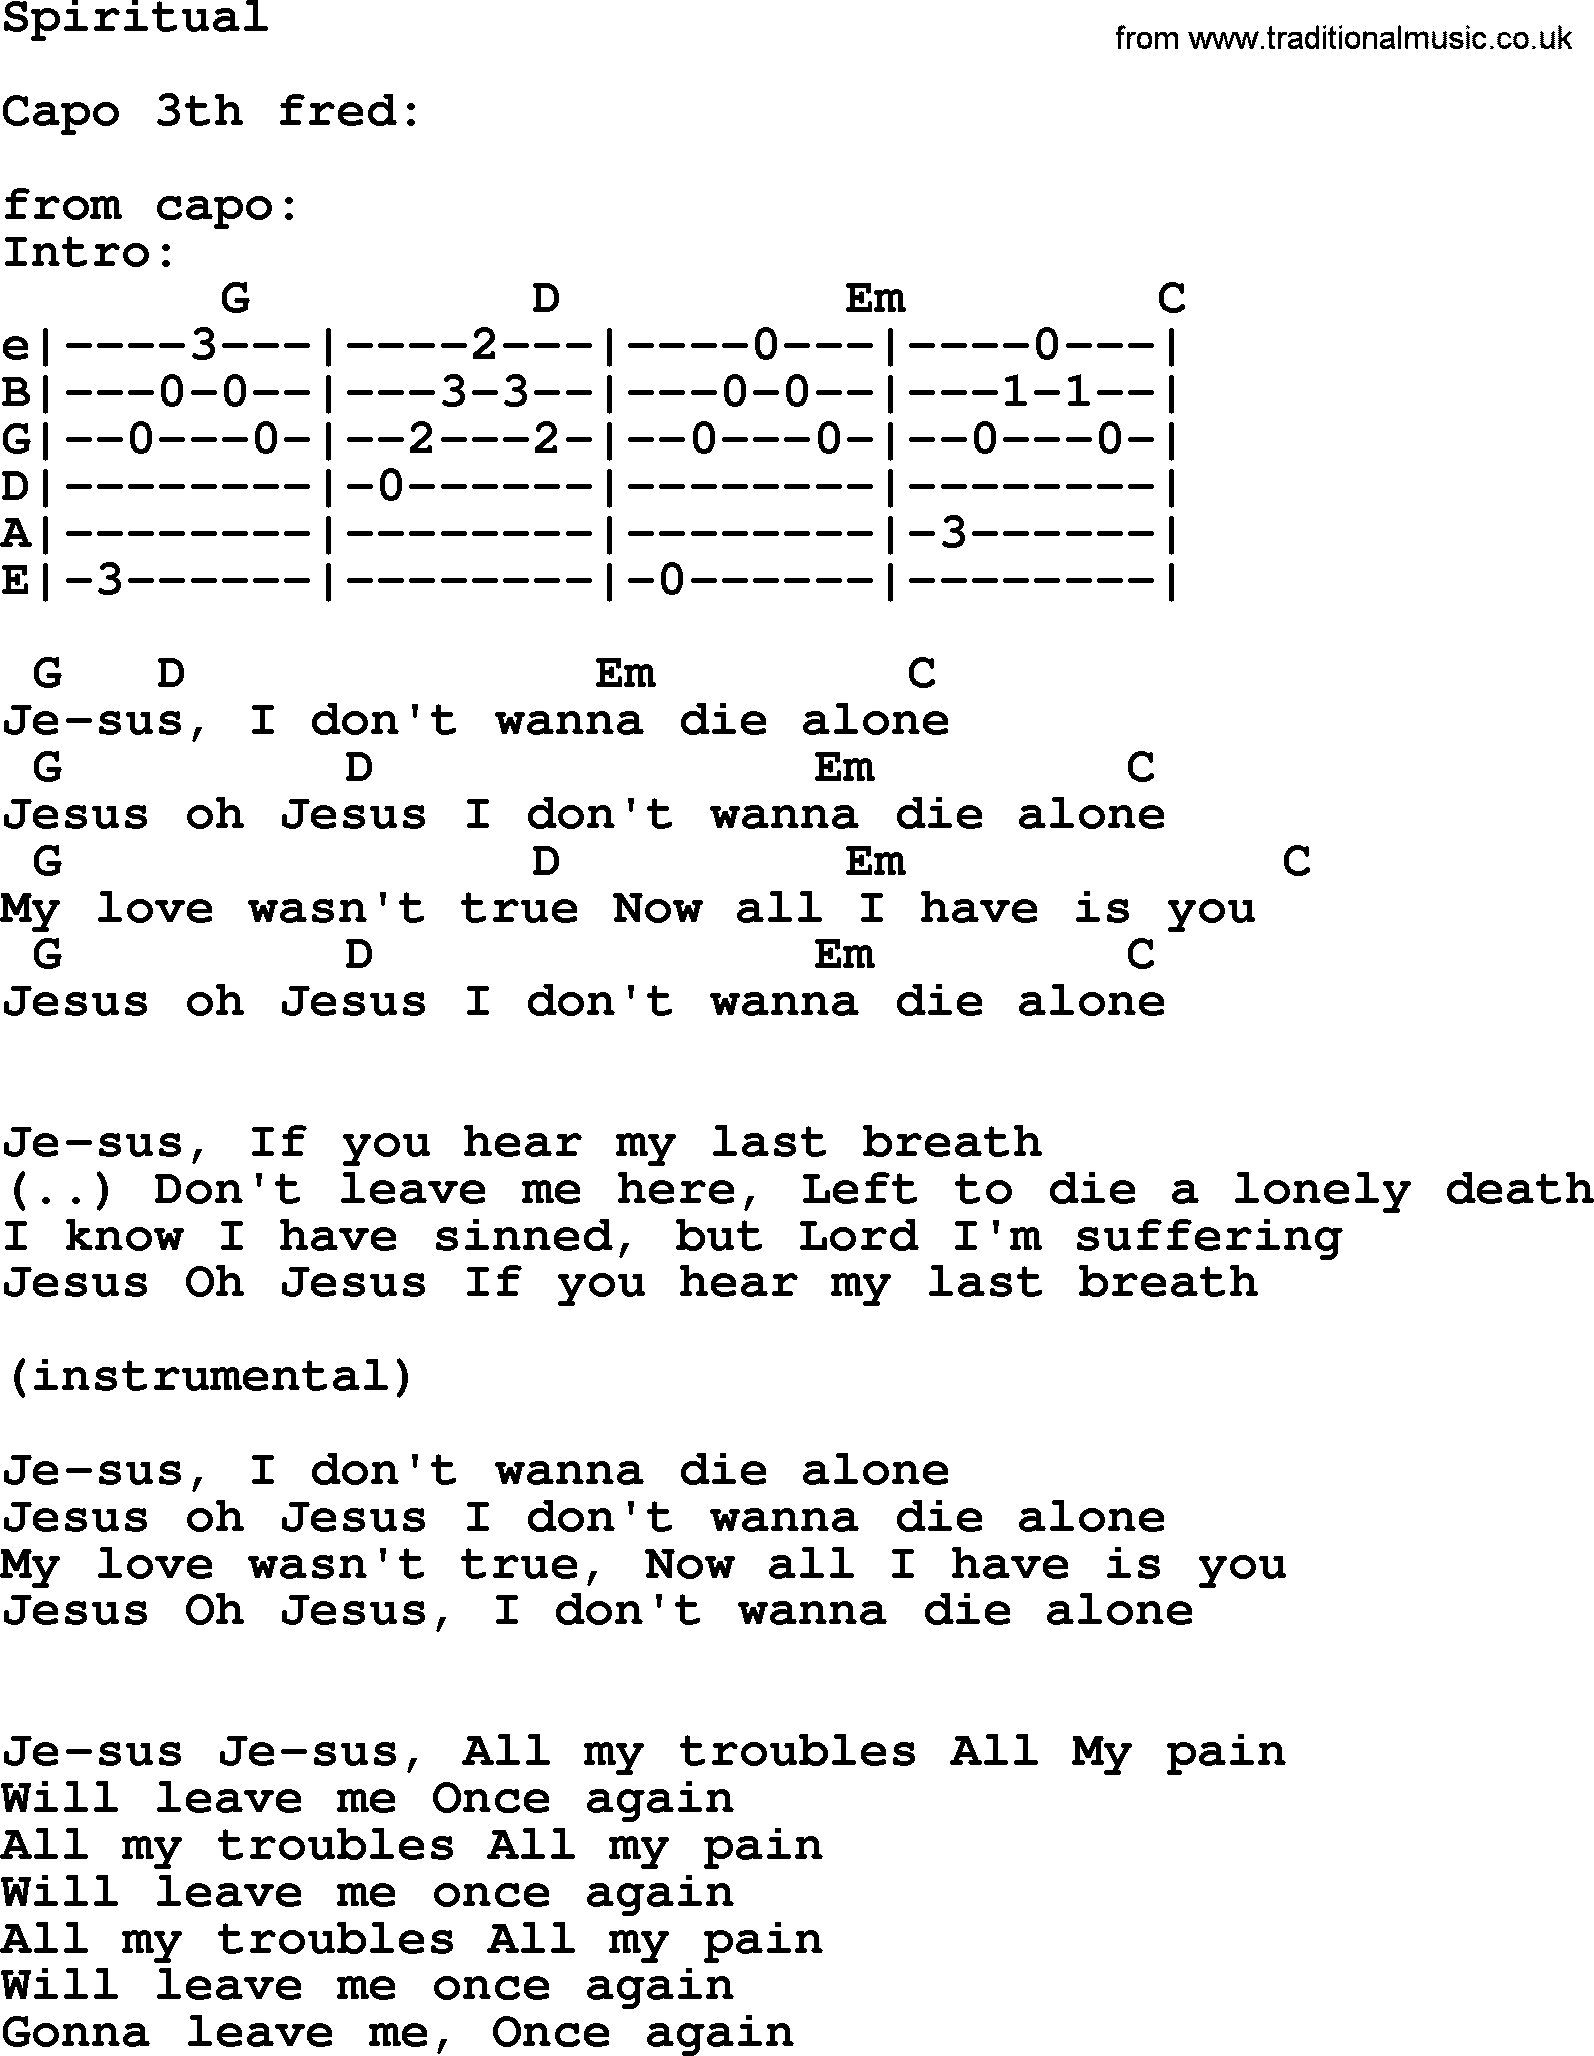 Johnny Cash song Spiritual, lyrics and chords